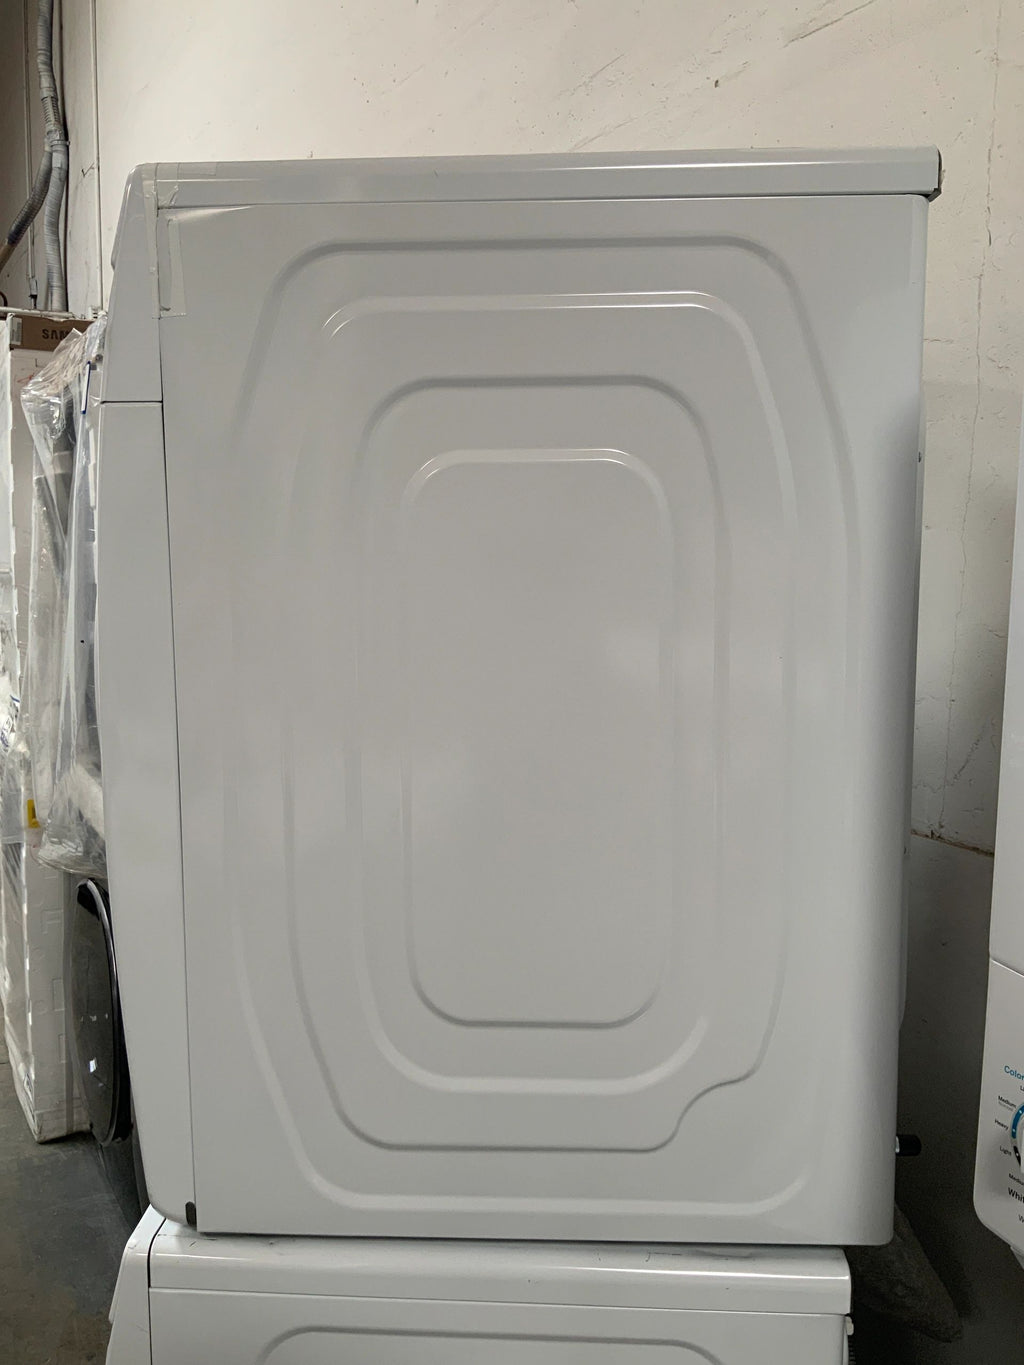 NEW Dent & Scratch. 7.5 cu. ft. 120-Volt White Gas Dryer with Sensor Dry (Pedestals Sold Separately) Model: DVG45T6000W